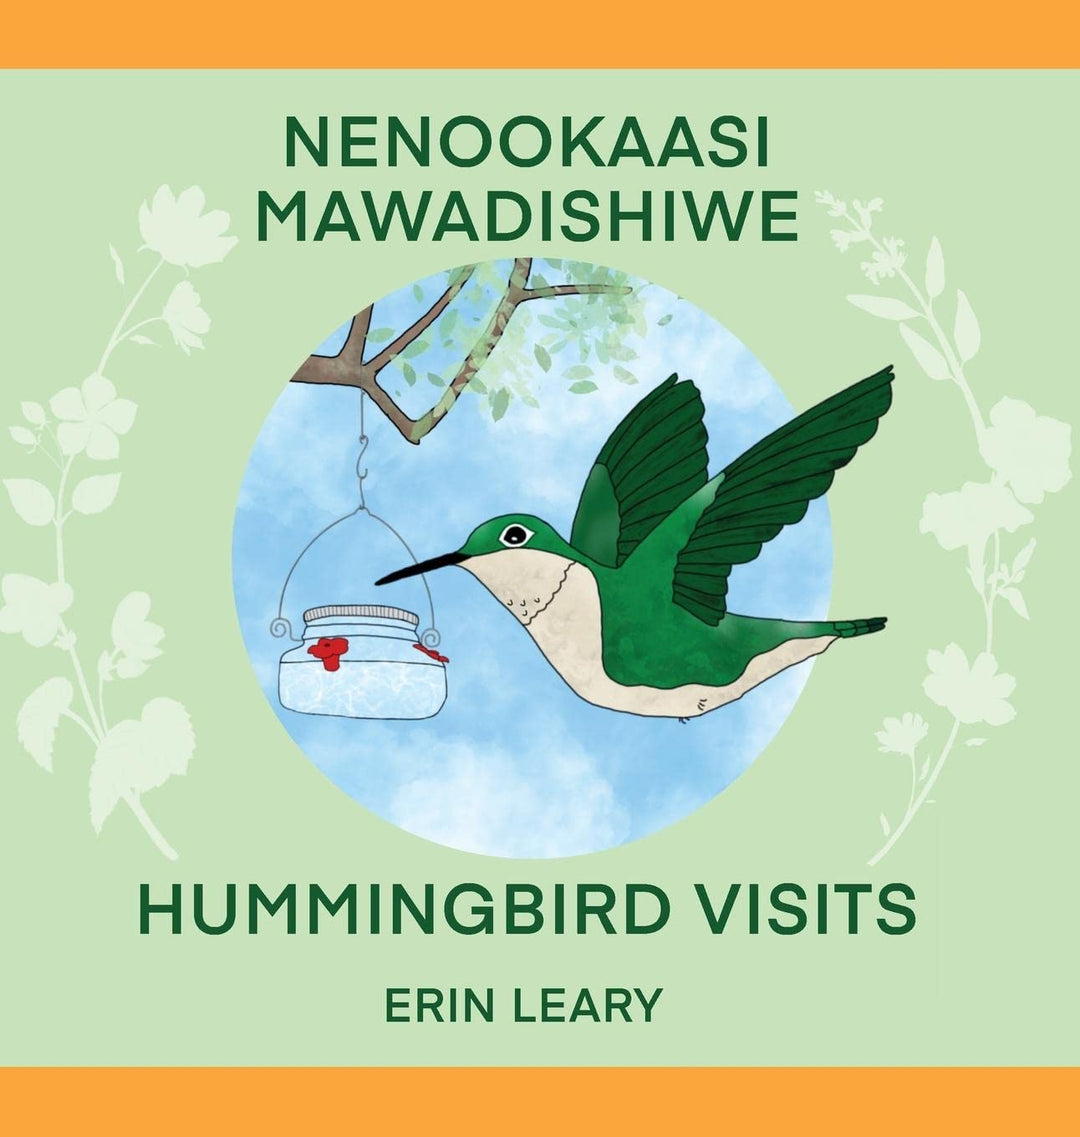  Nenookaasi Mawadishiwe: Hummingbirds Visits by Erin Leary